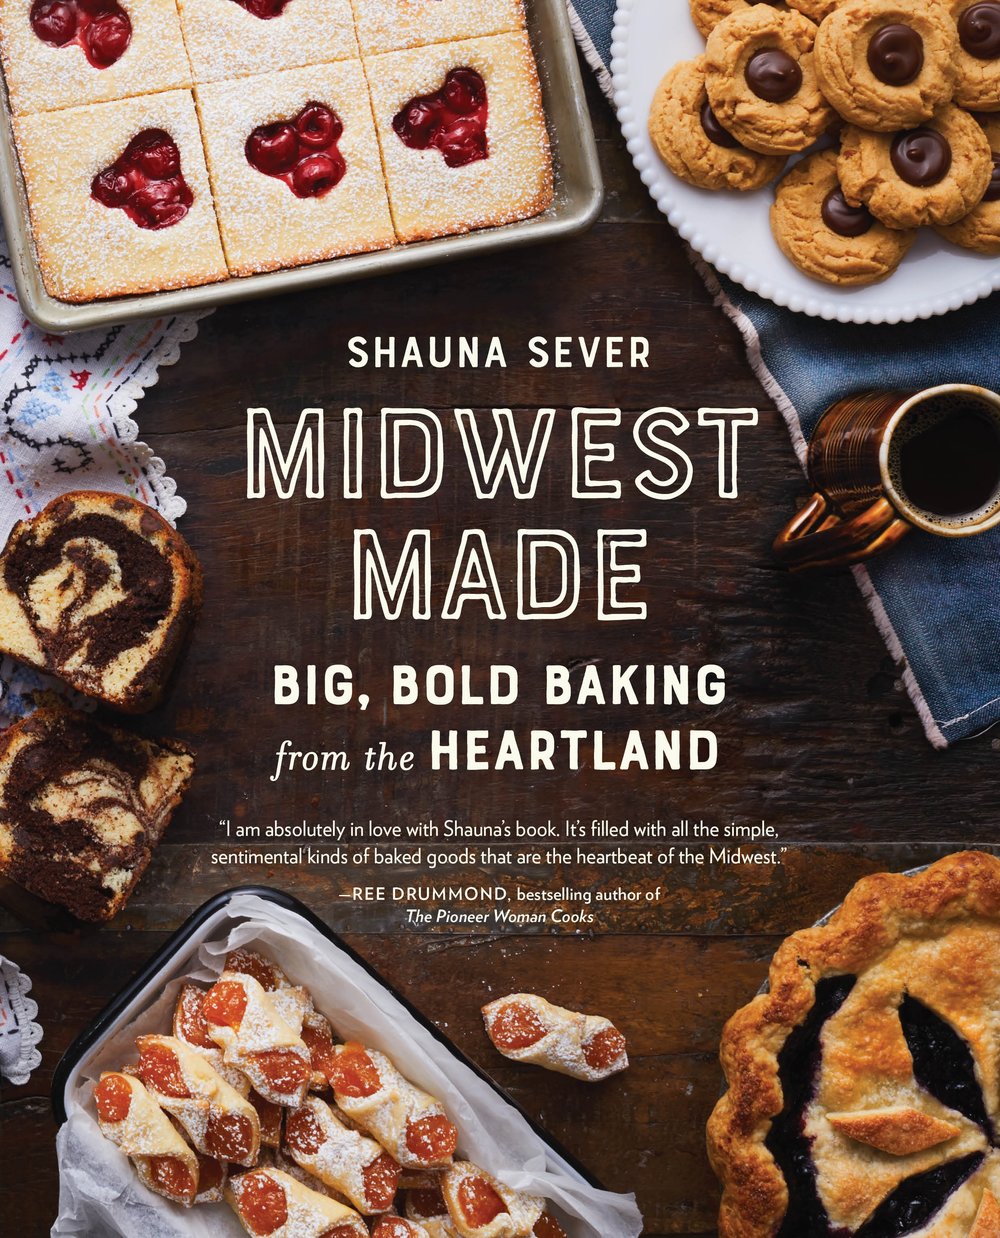 Shauner Sever - Midwest Baking